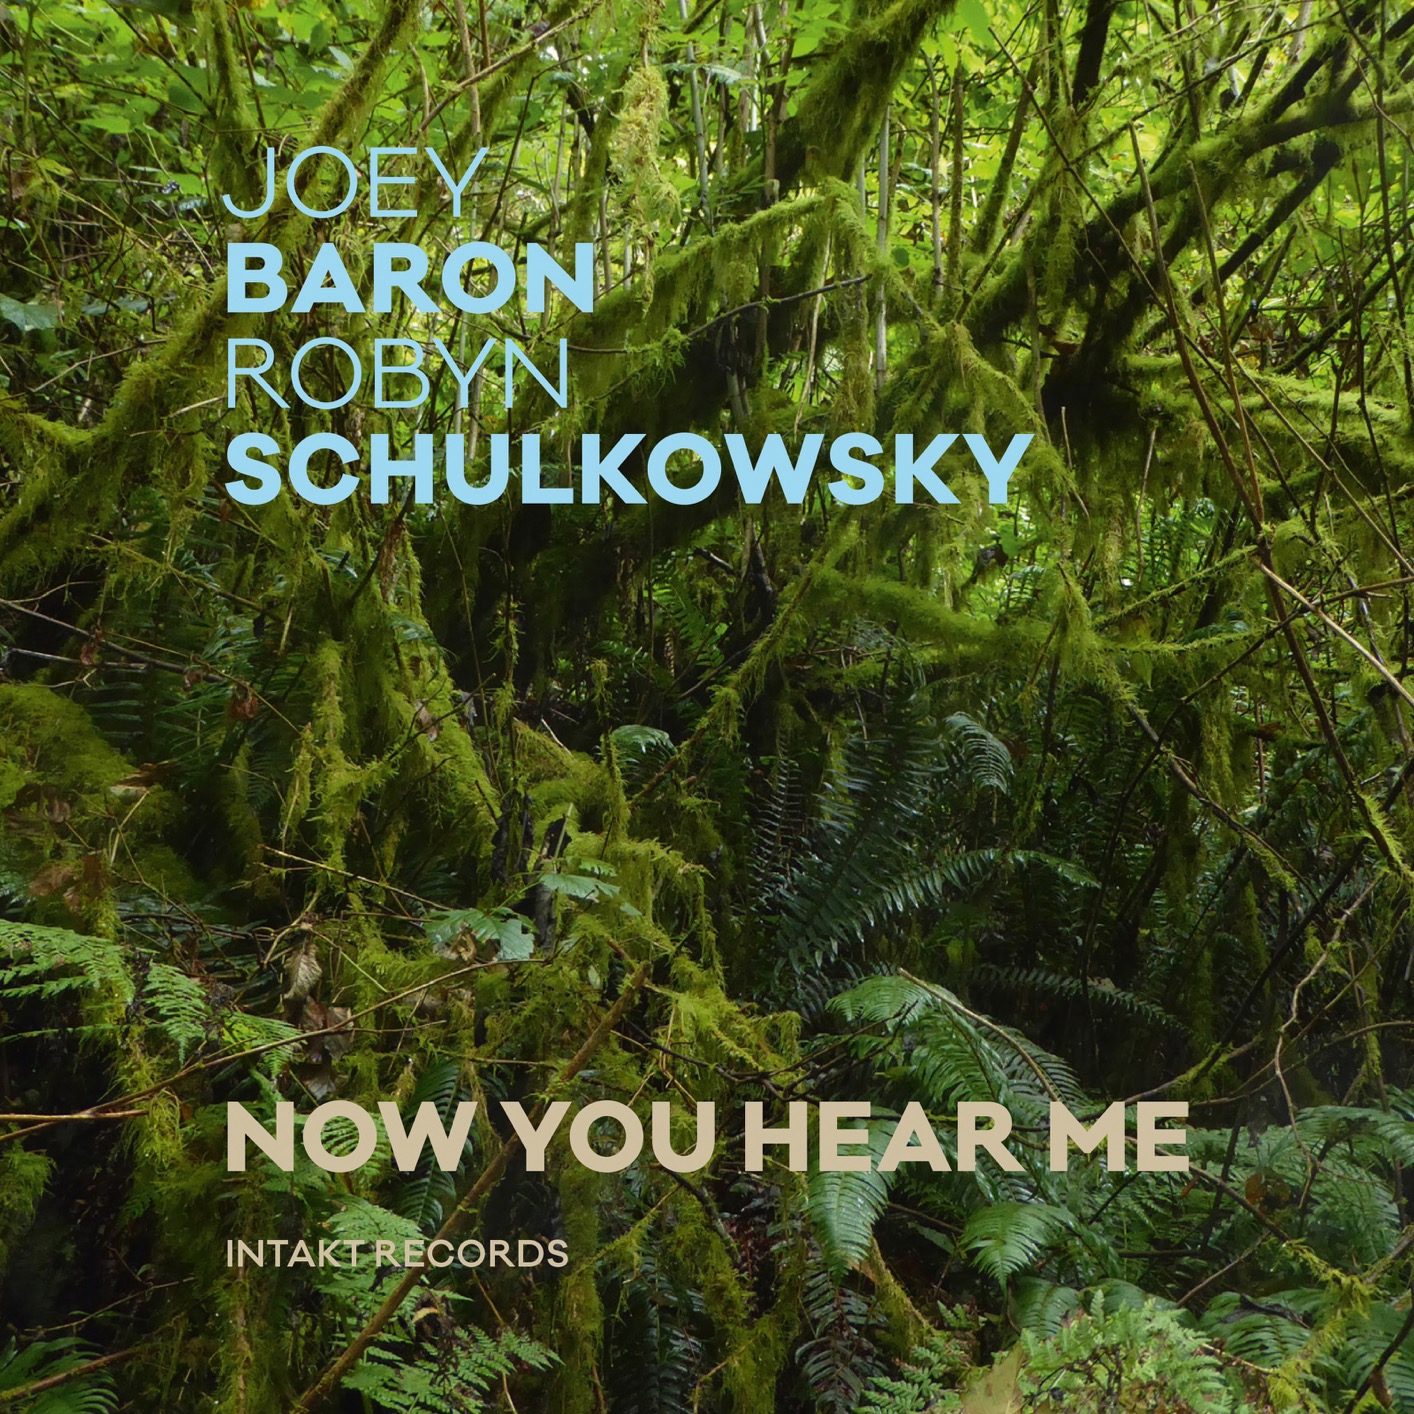 Joey Baron & Robyn Schulkowsky - Now You Hear Me (2018) [FLAC 24bit/96kHz]